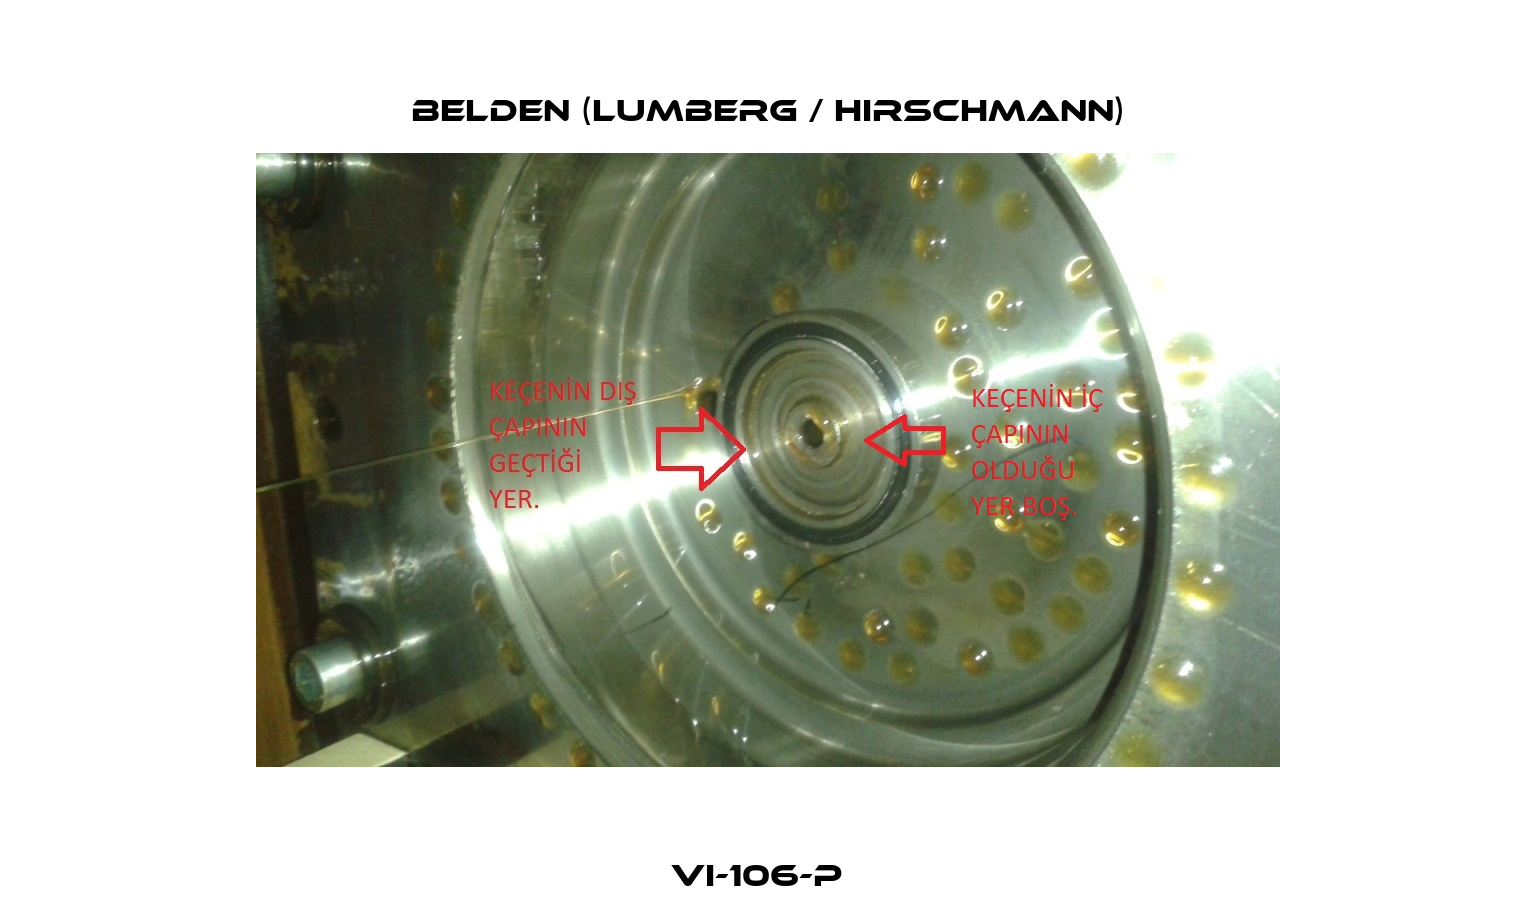 VI-106-P   Belden (Lumberg / Hirschmann)